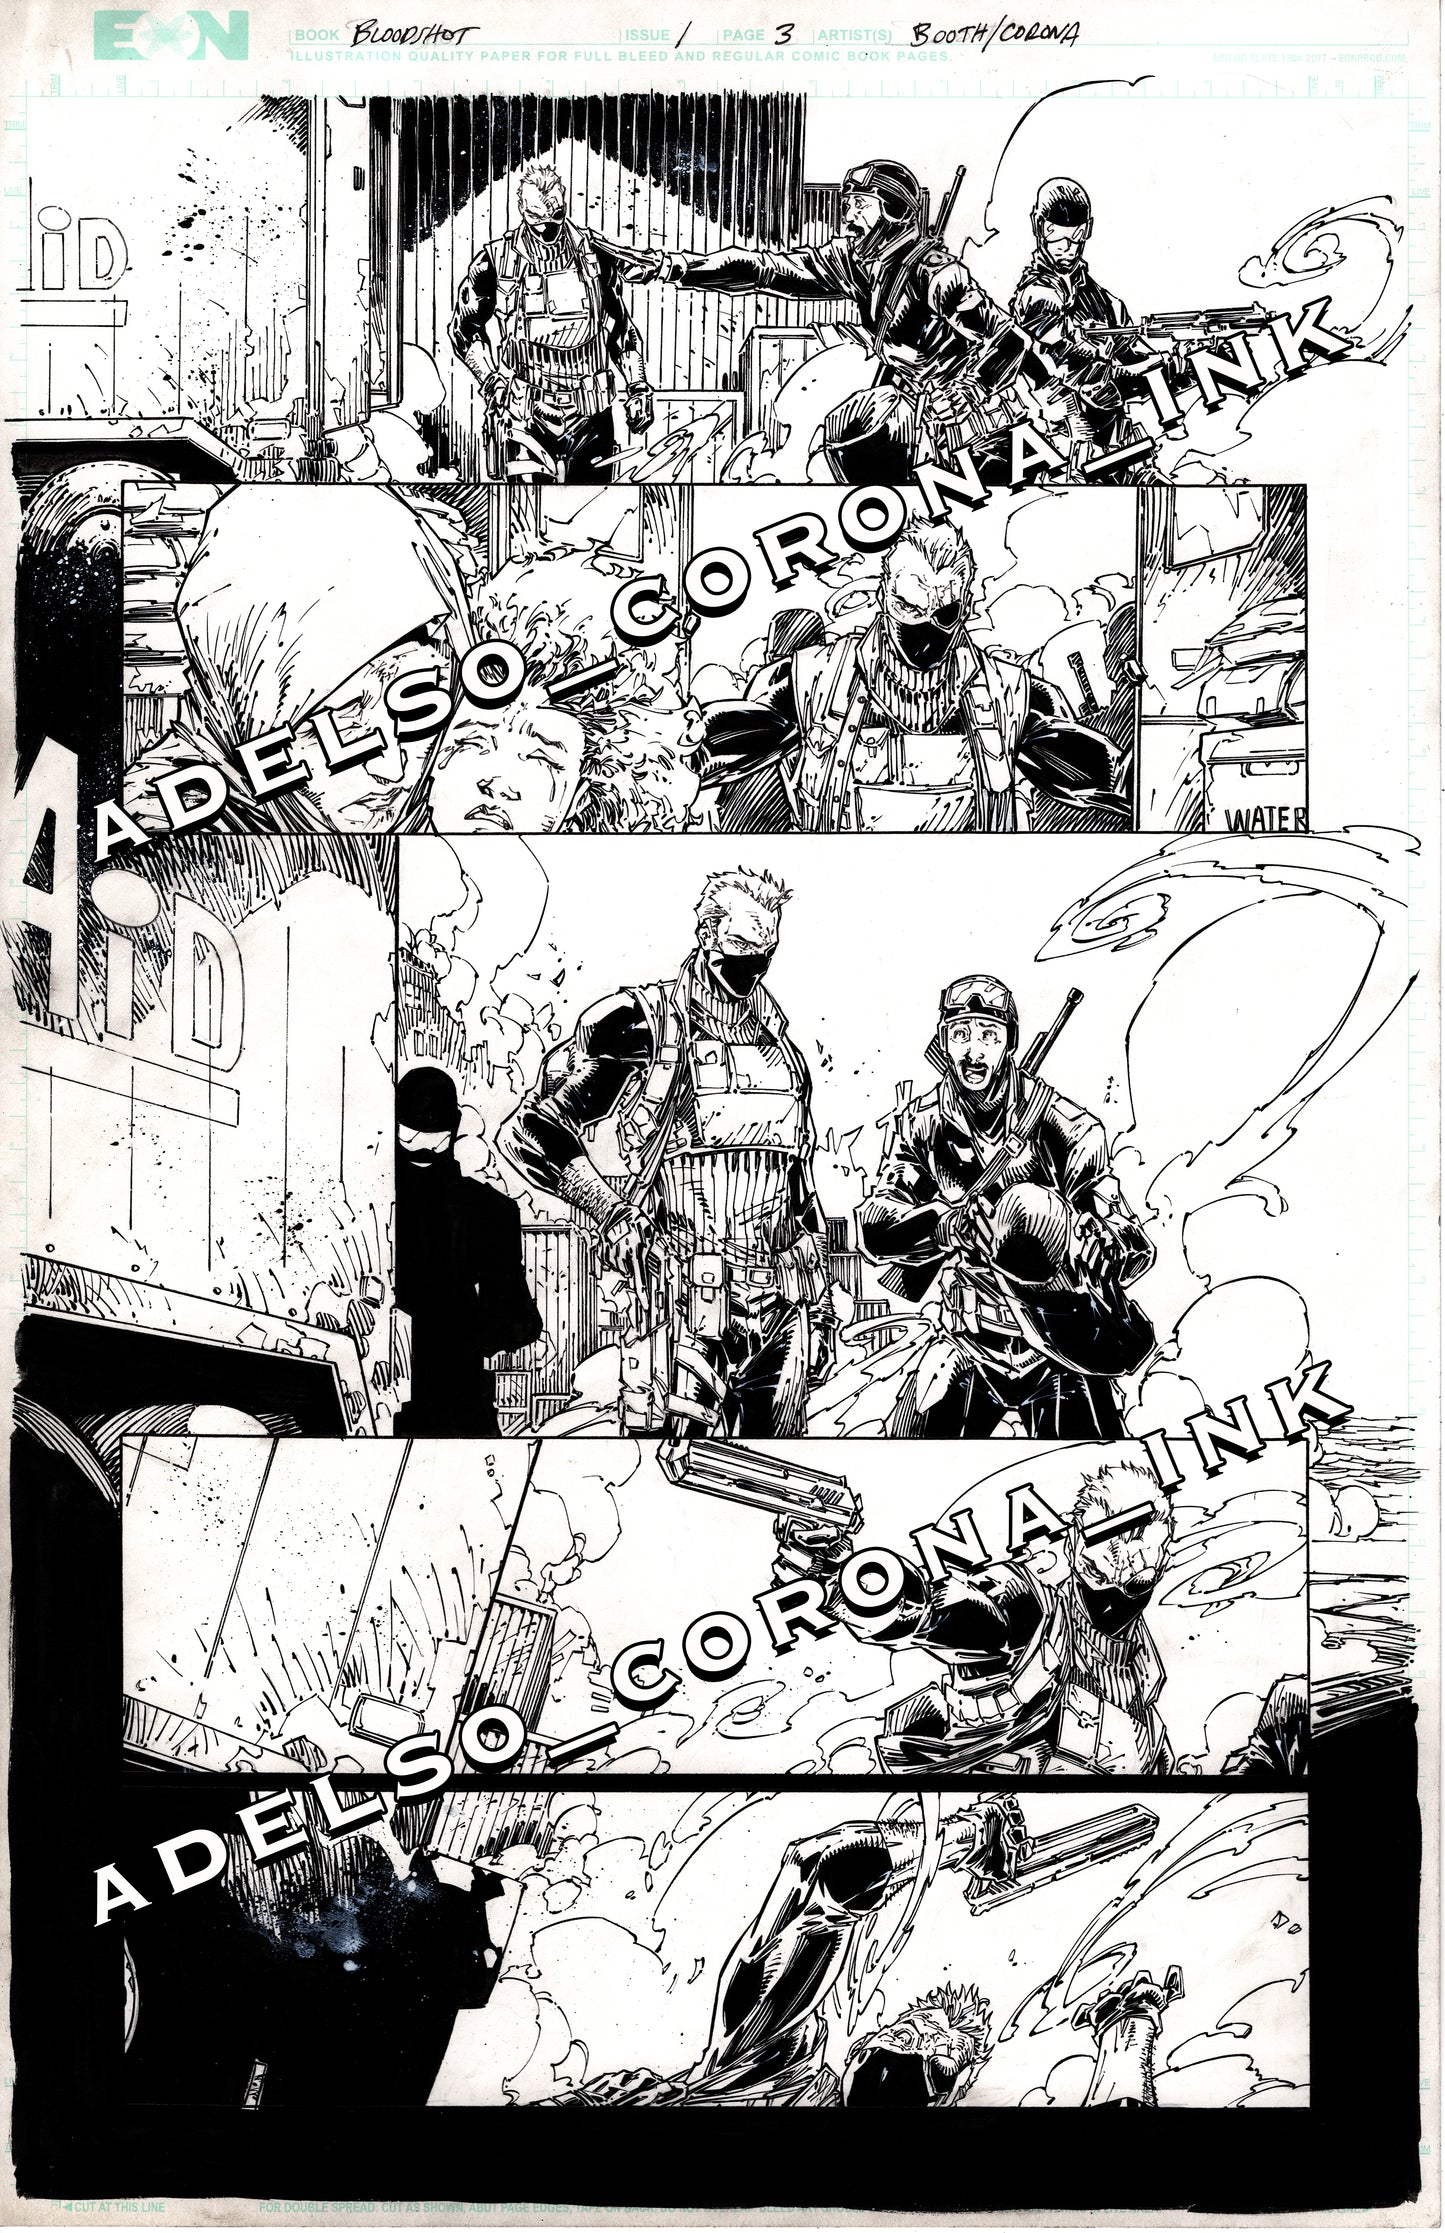 Bloodshot #1 Page3 Inks